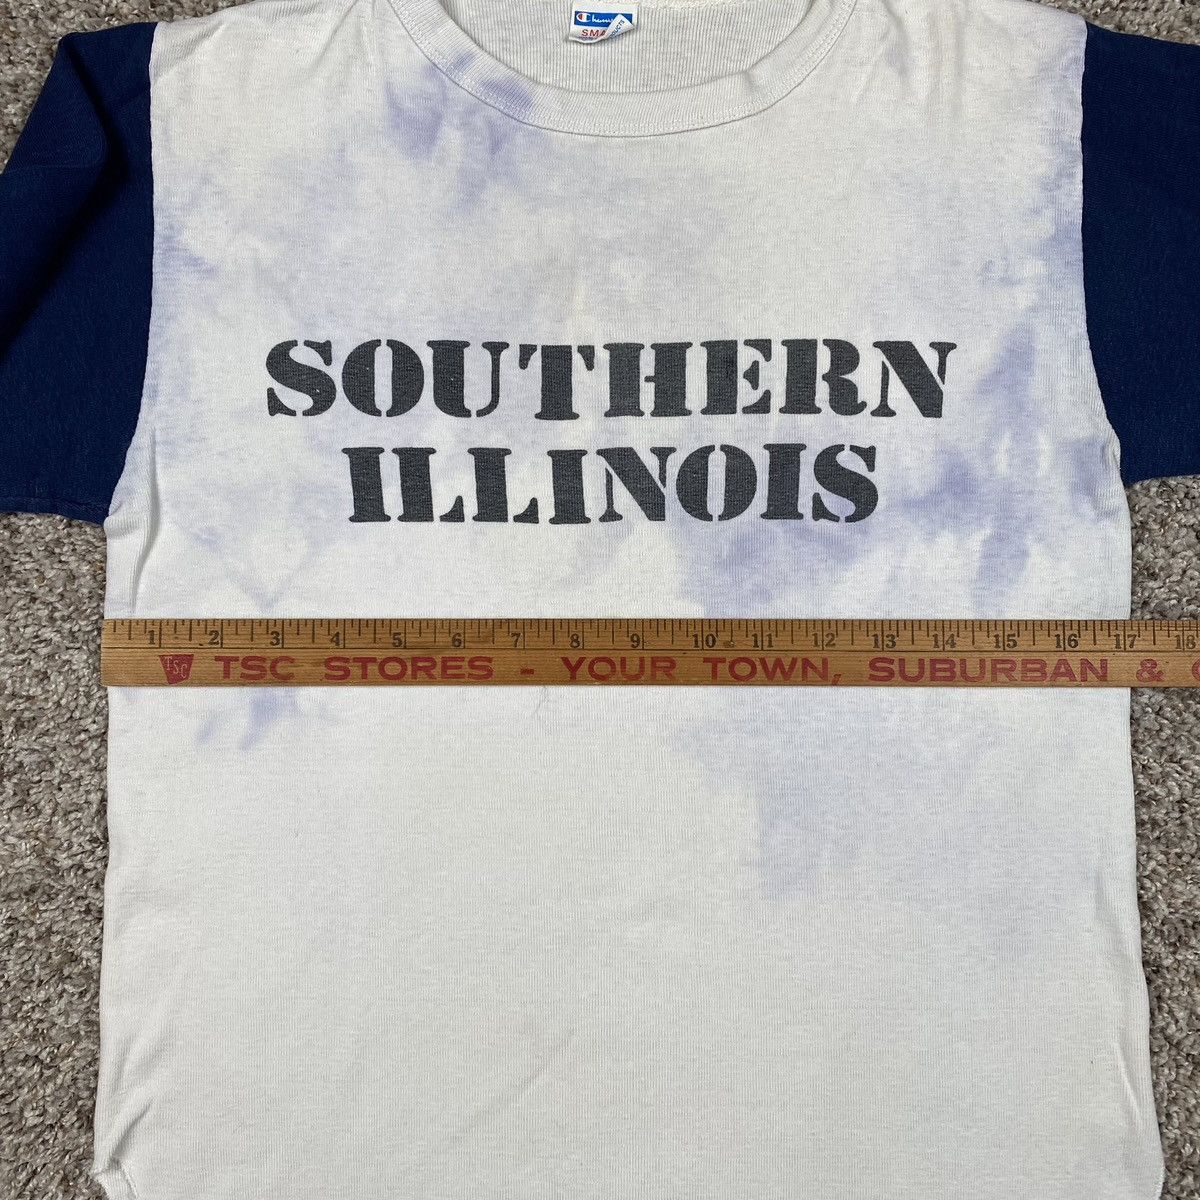 Vintage Vintage 80s Southern Illinois University T-Shirt Size US S / EU 44-46 / 1 - 2 Preview